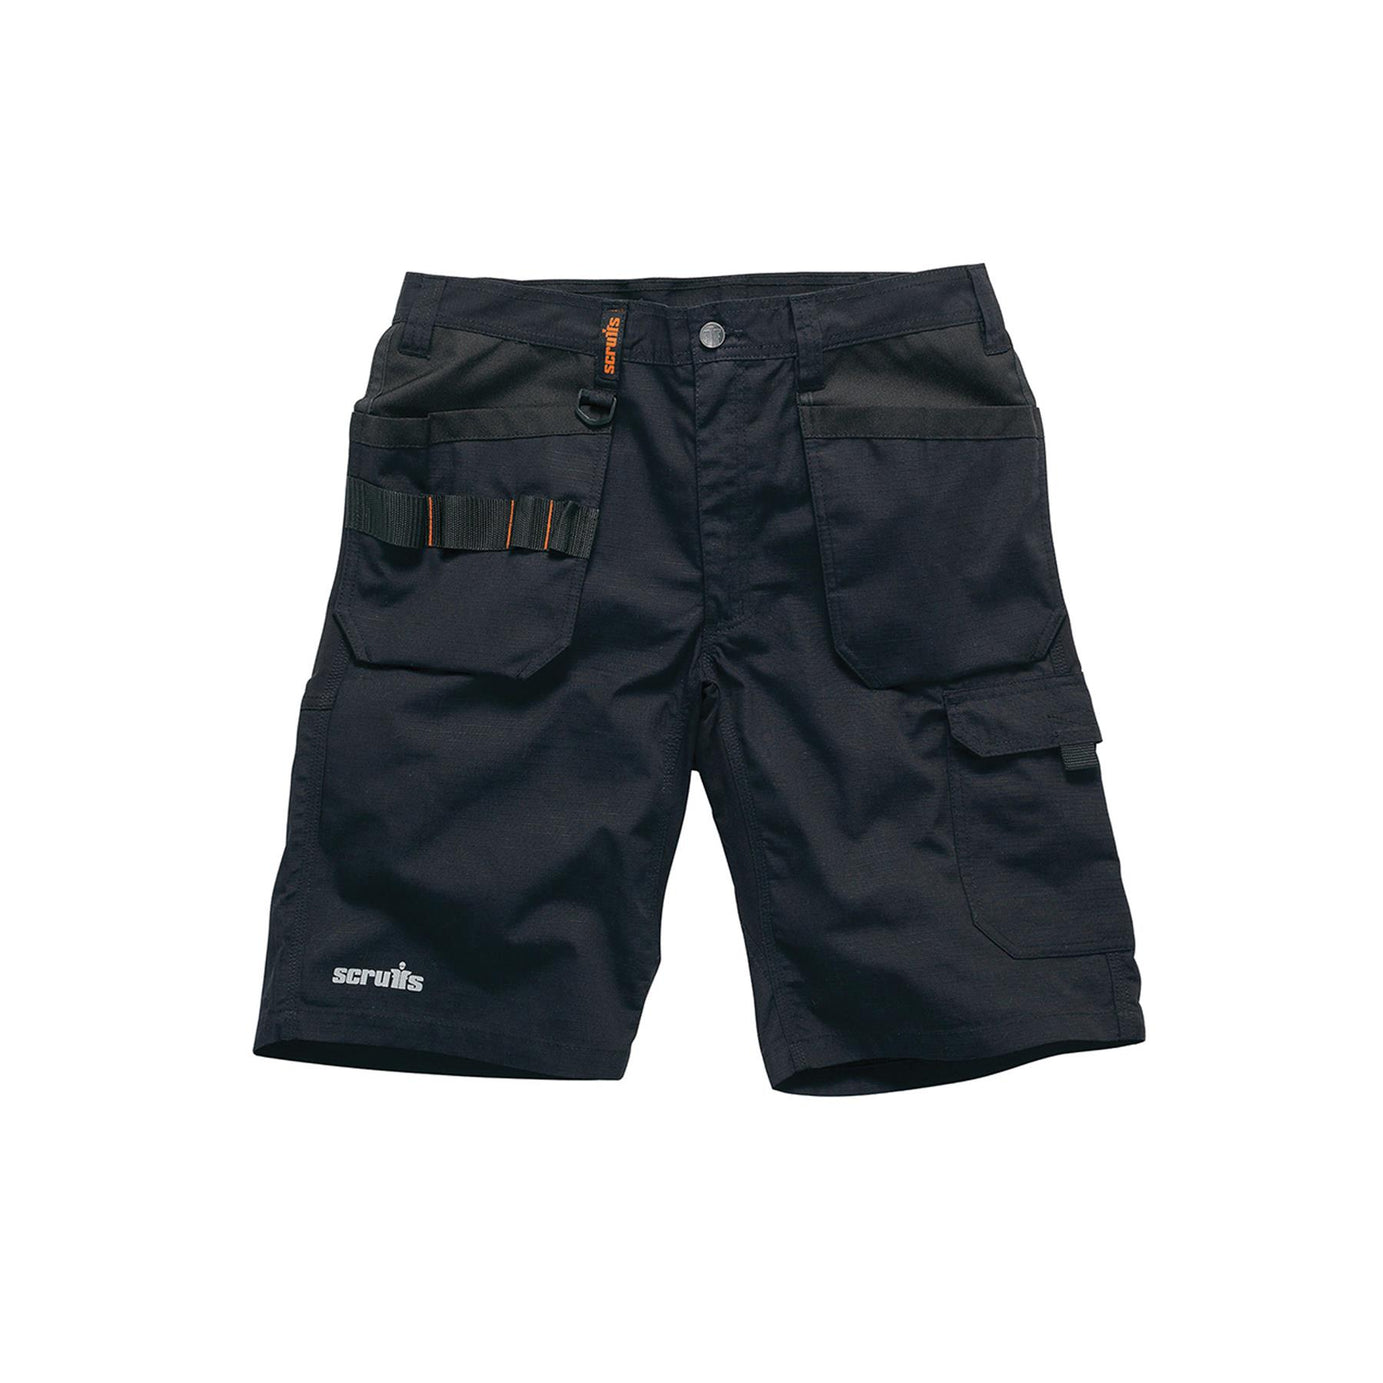 Scruffs Flex Holster Shorts Cargo Combat Pockets Hard Wearing Black 38 Waist